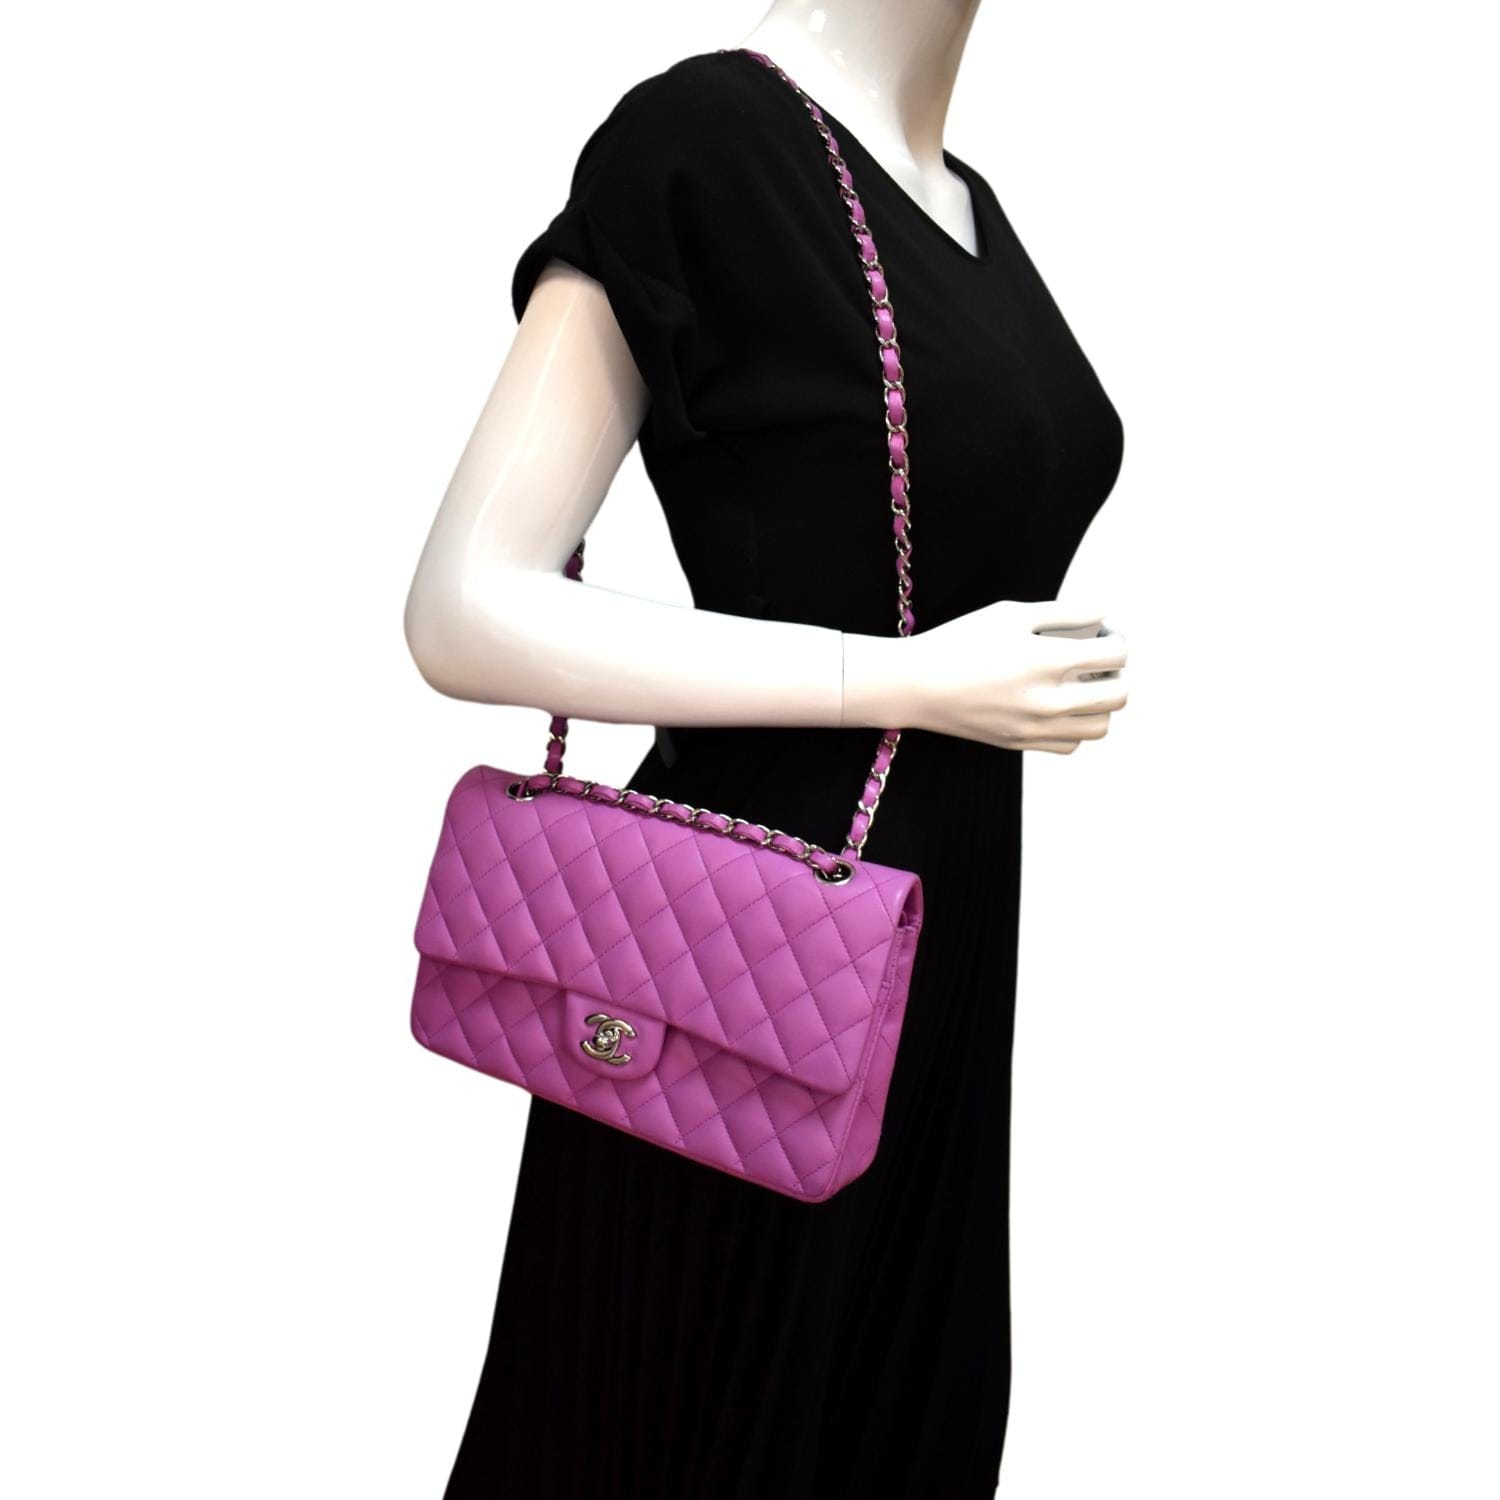 Chanel Classic Double Flap Medium Handbag